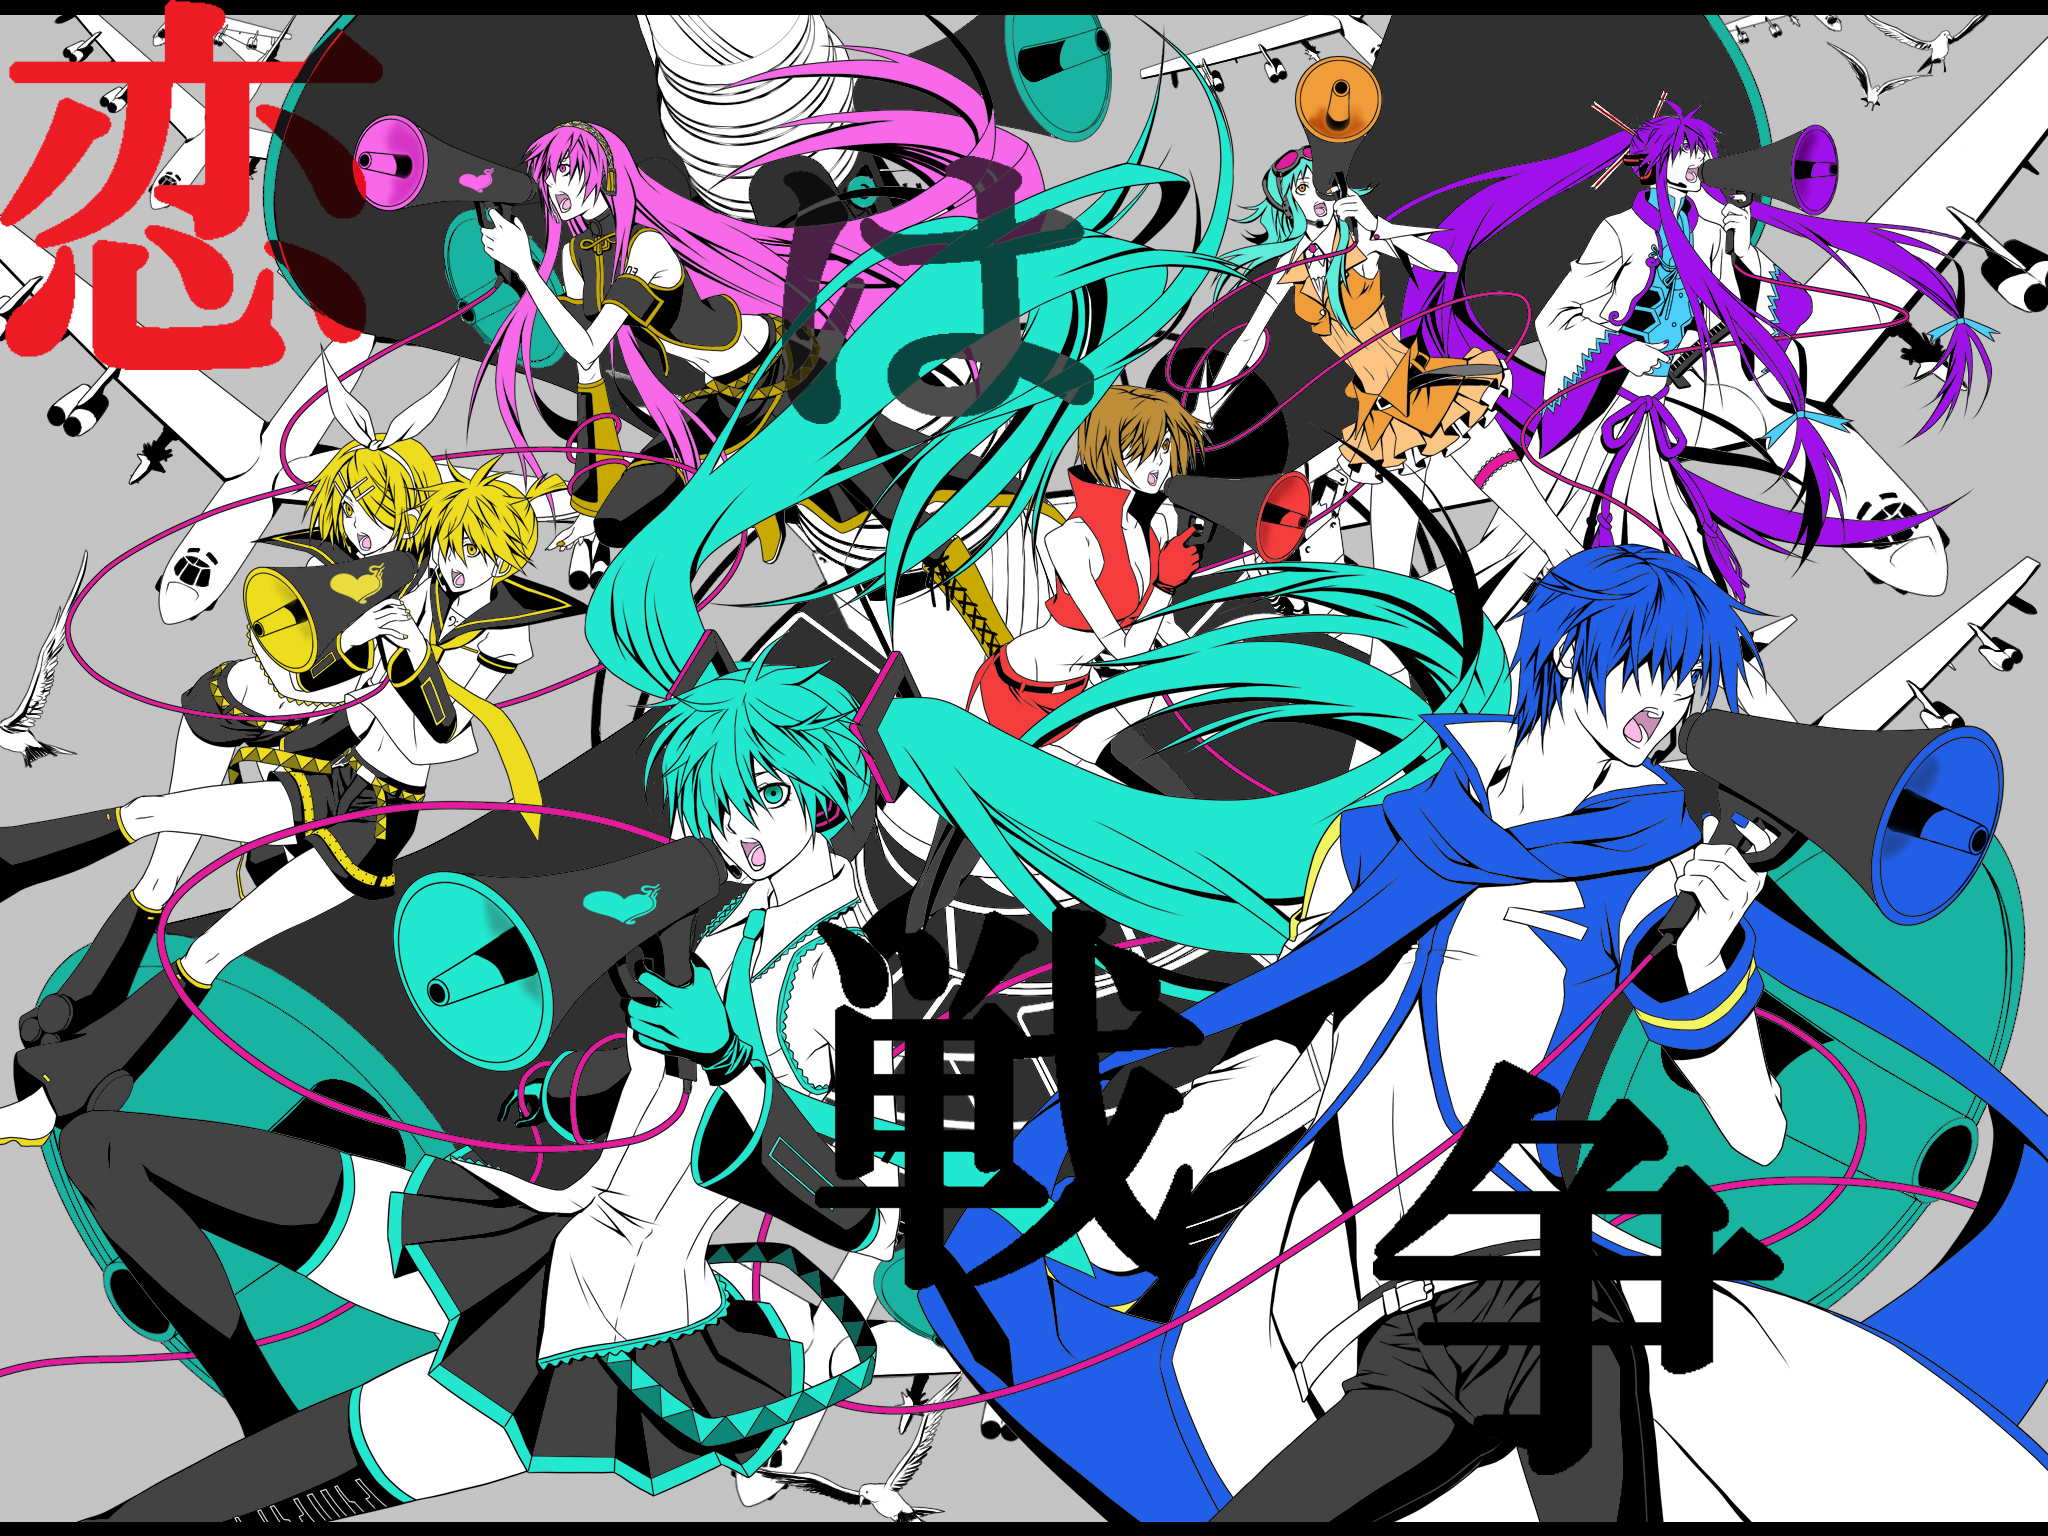 Descarga gratis la imagen Vocaloid, Luka Megurine, Animado, Hatsune Miku, El Amor Es Guerra (Vocaloid), Rin Kagamine, Gumi (Vocaloid), Kaito (Vocaloid), Len Kagamine, Meiko (Vocaloid), Kamui Gakupo en el escritorio de tu PC